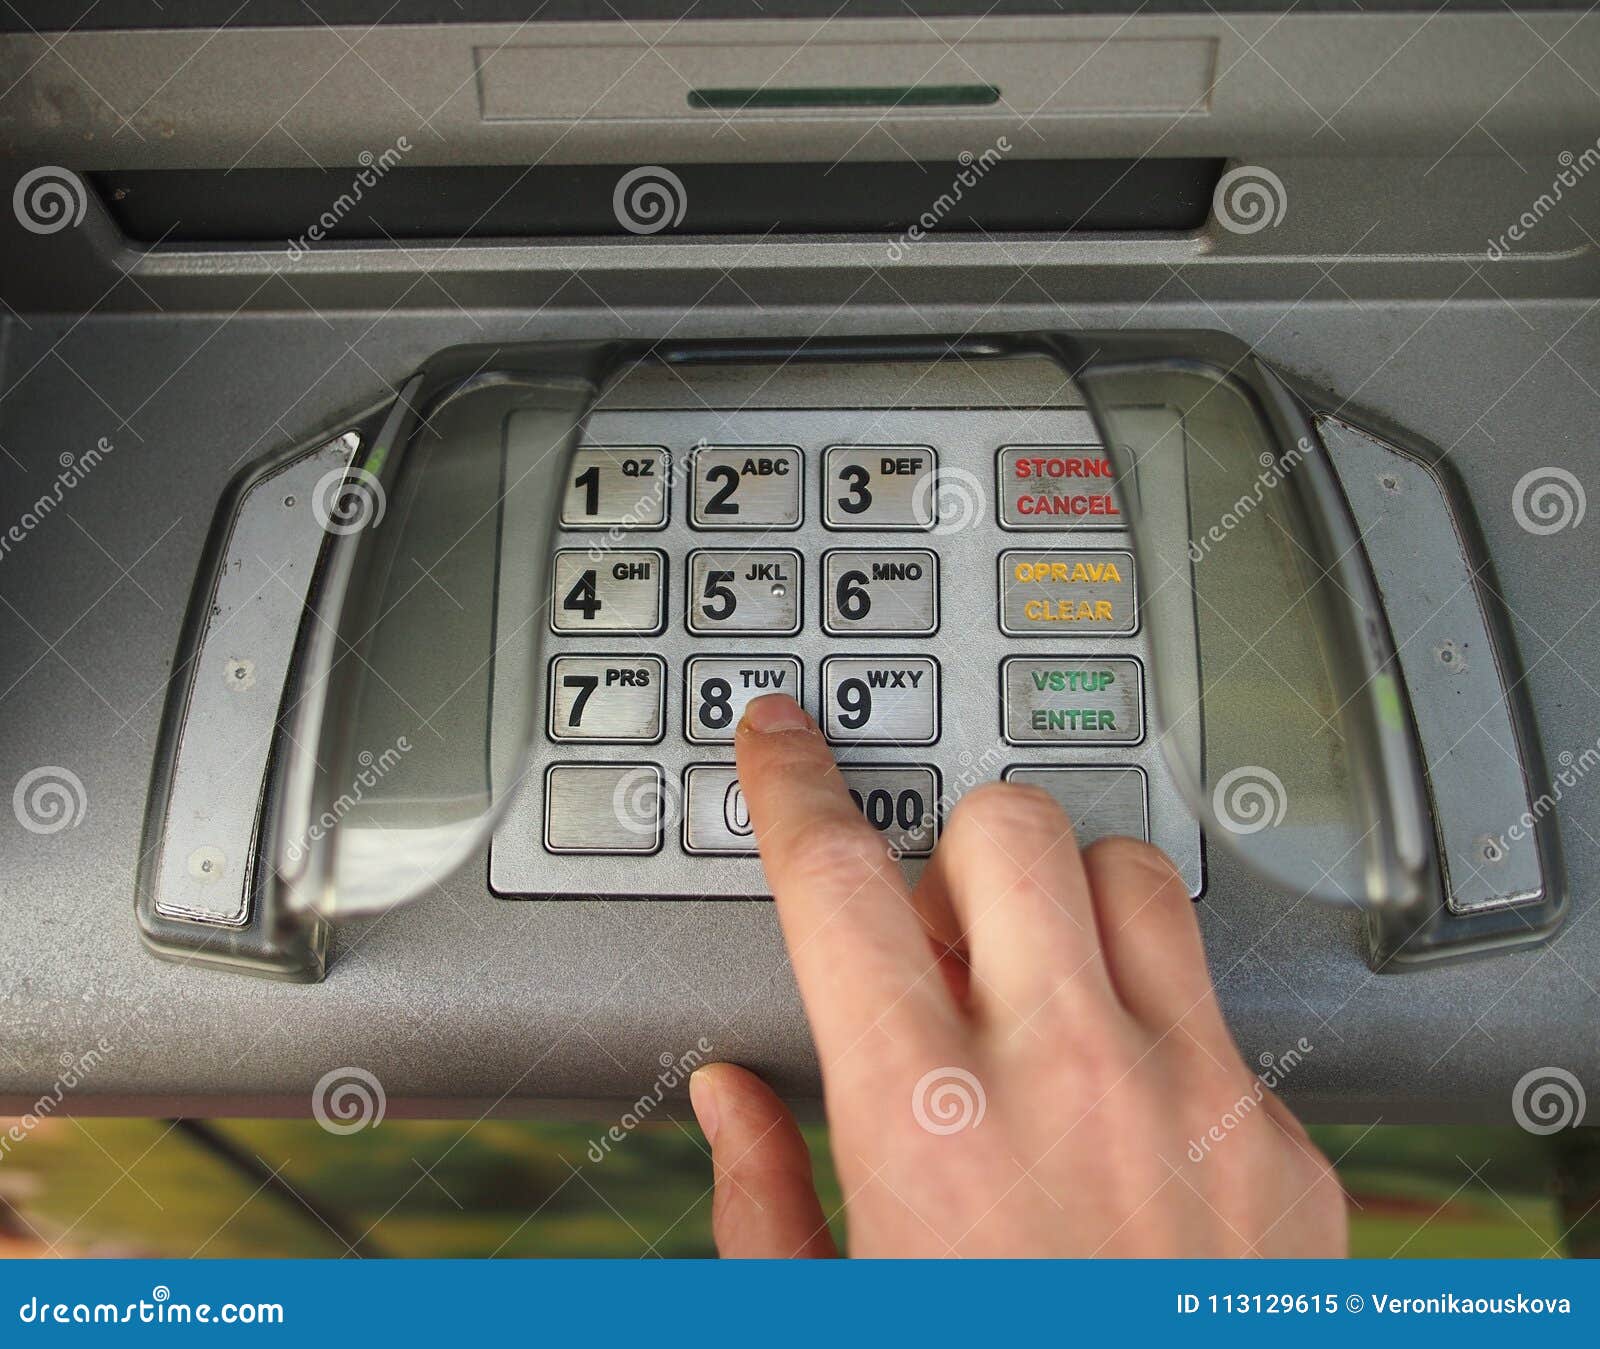 cash dispenser keybord with czech and english language inscription.